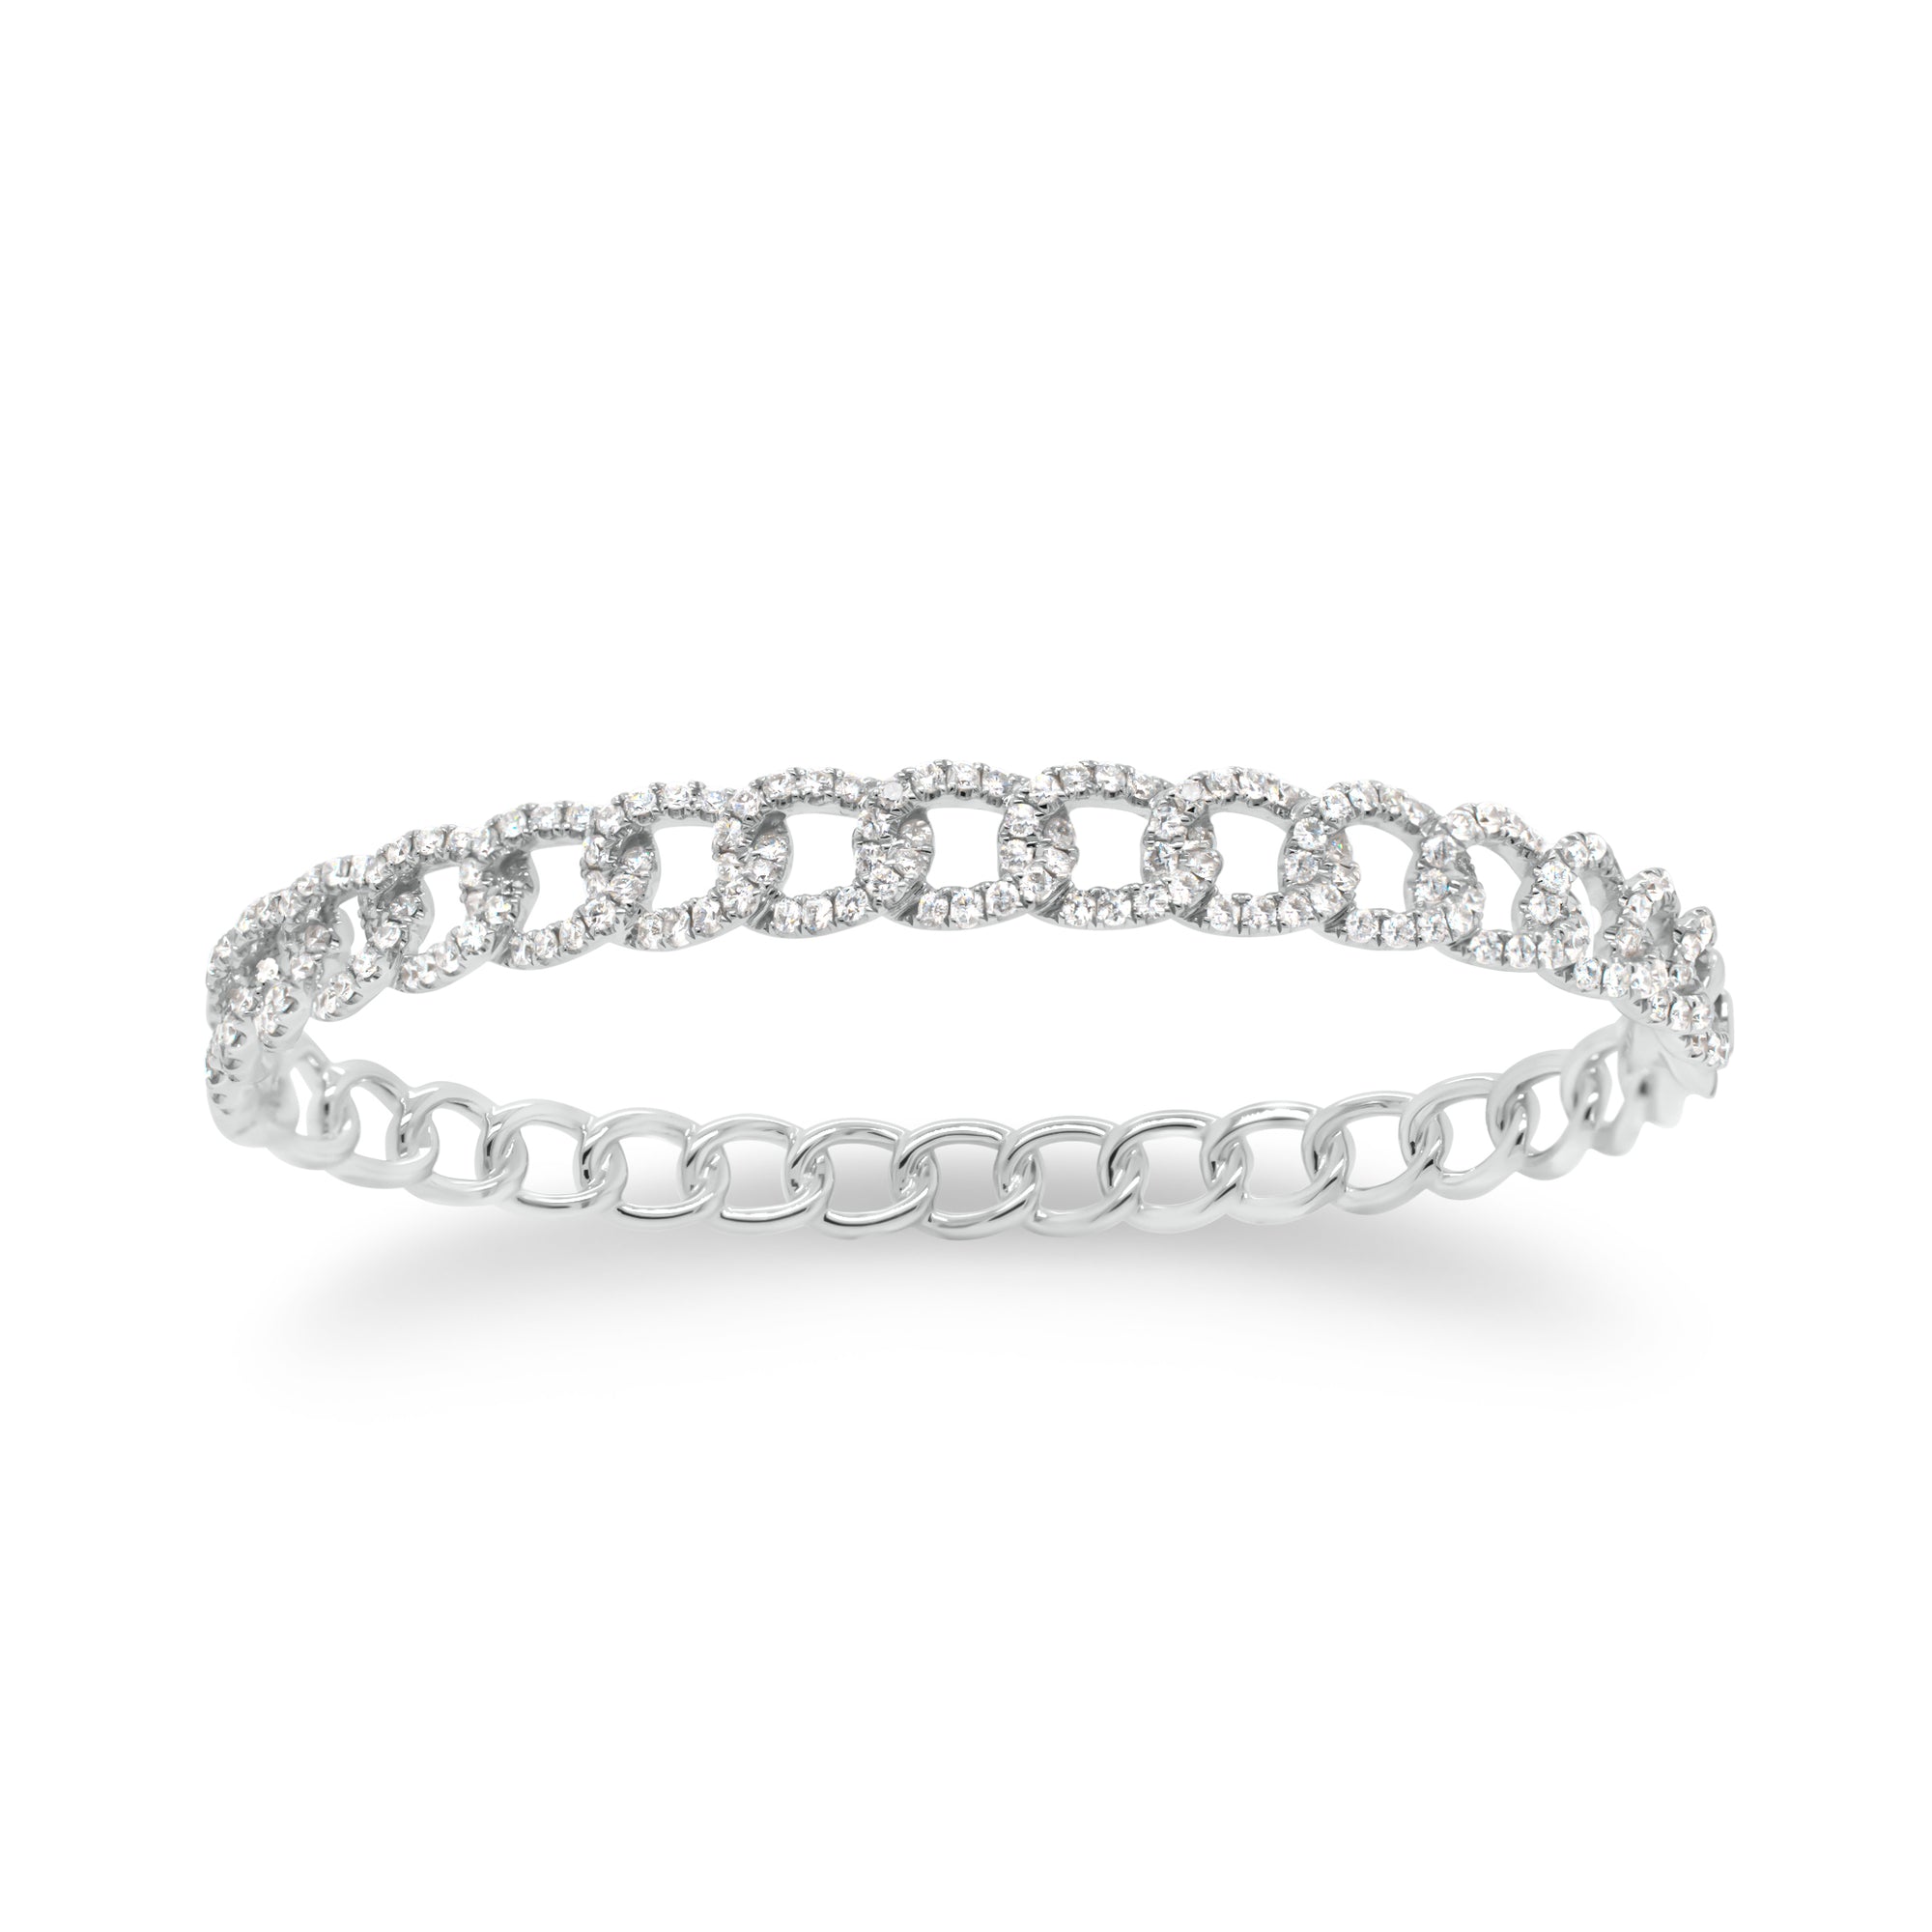 Diamond Chain Bangle Bracelet -14K white gold weighing 13.47 grams -191 round diamonds totaling 1.44 carats